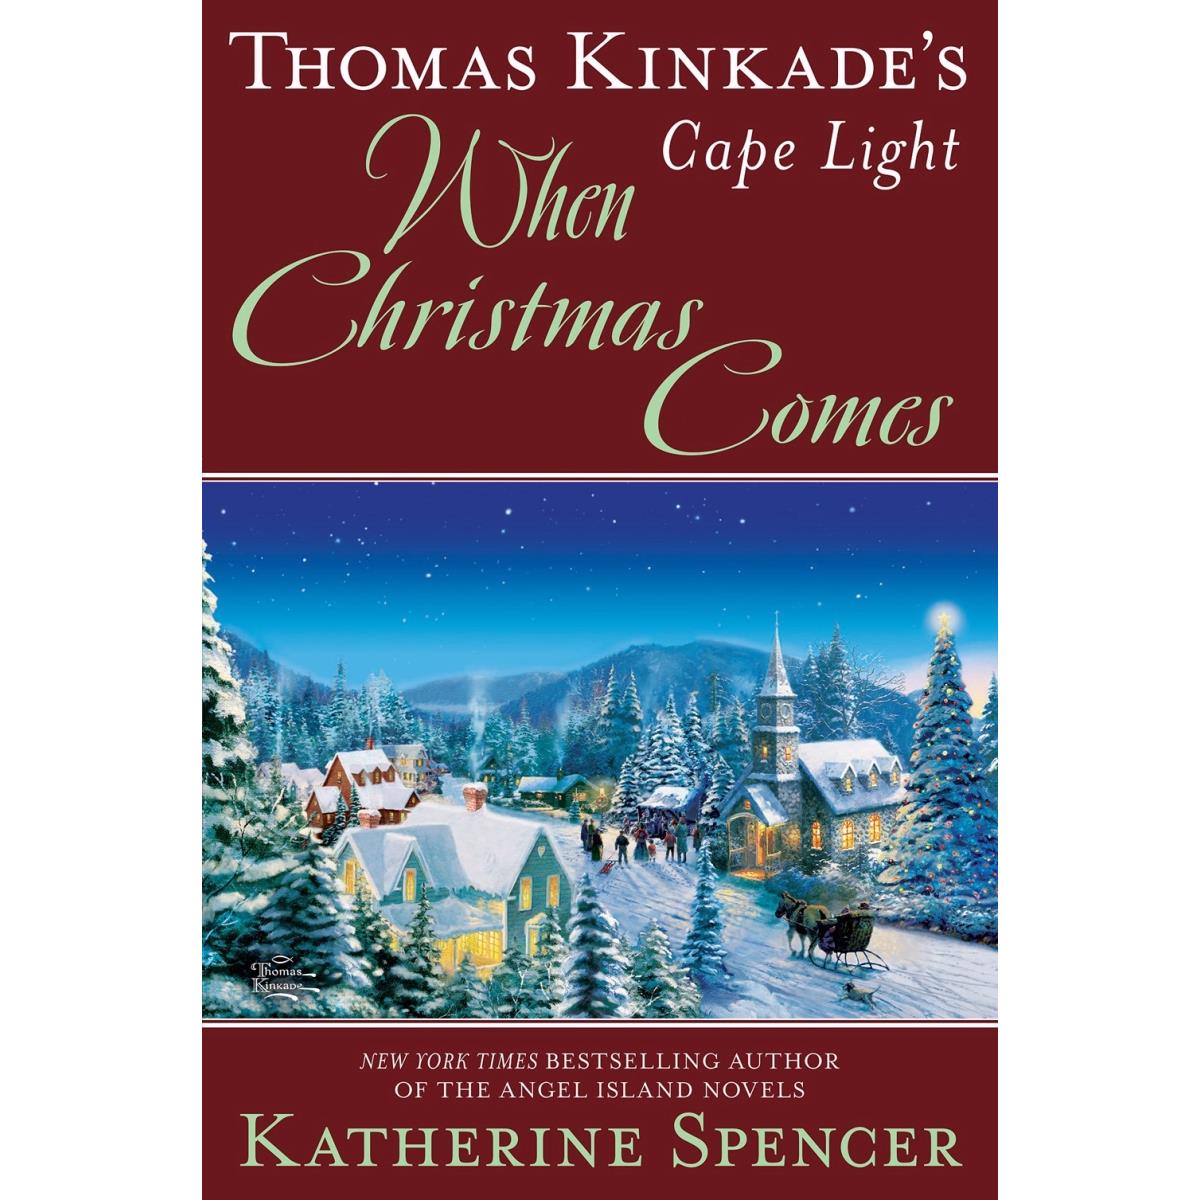 158759 Thomas Kinkades Cape Light When Christmas Comes